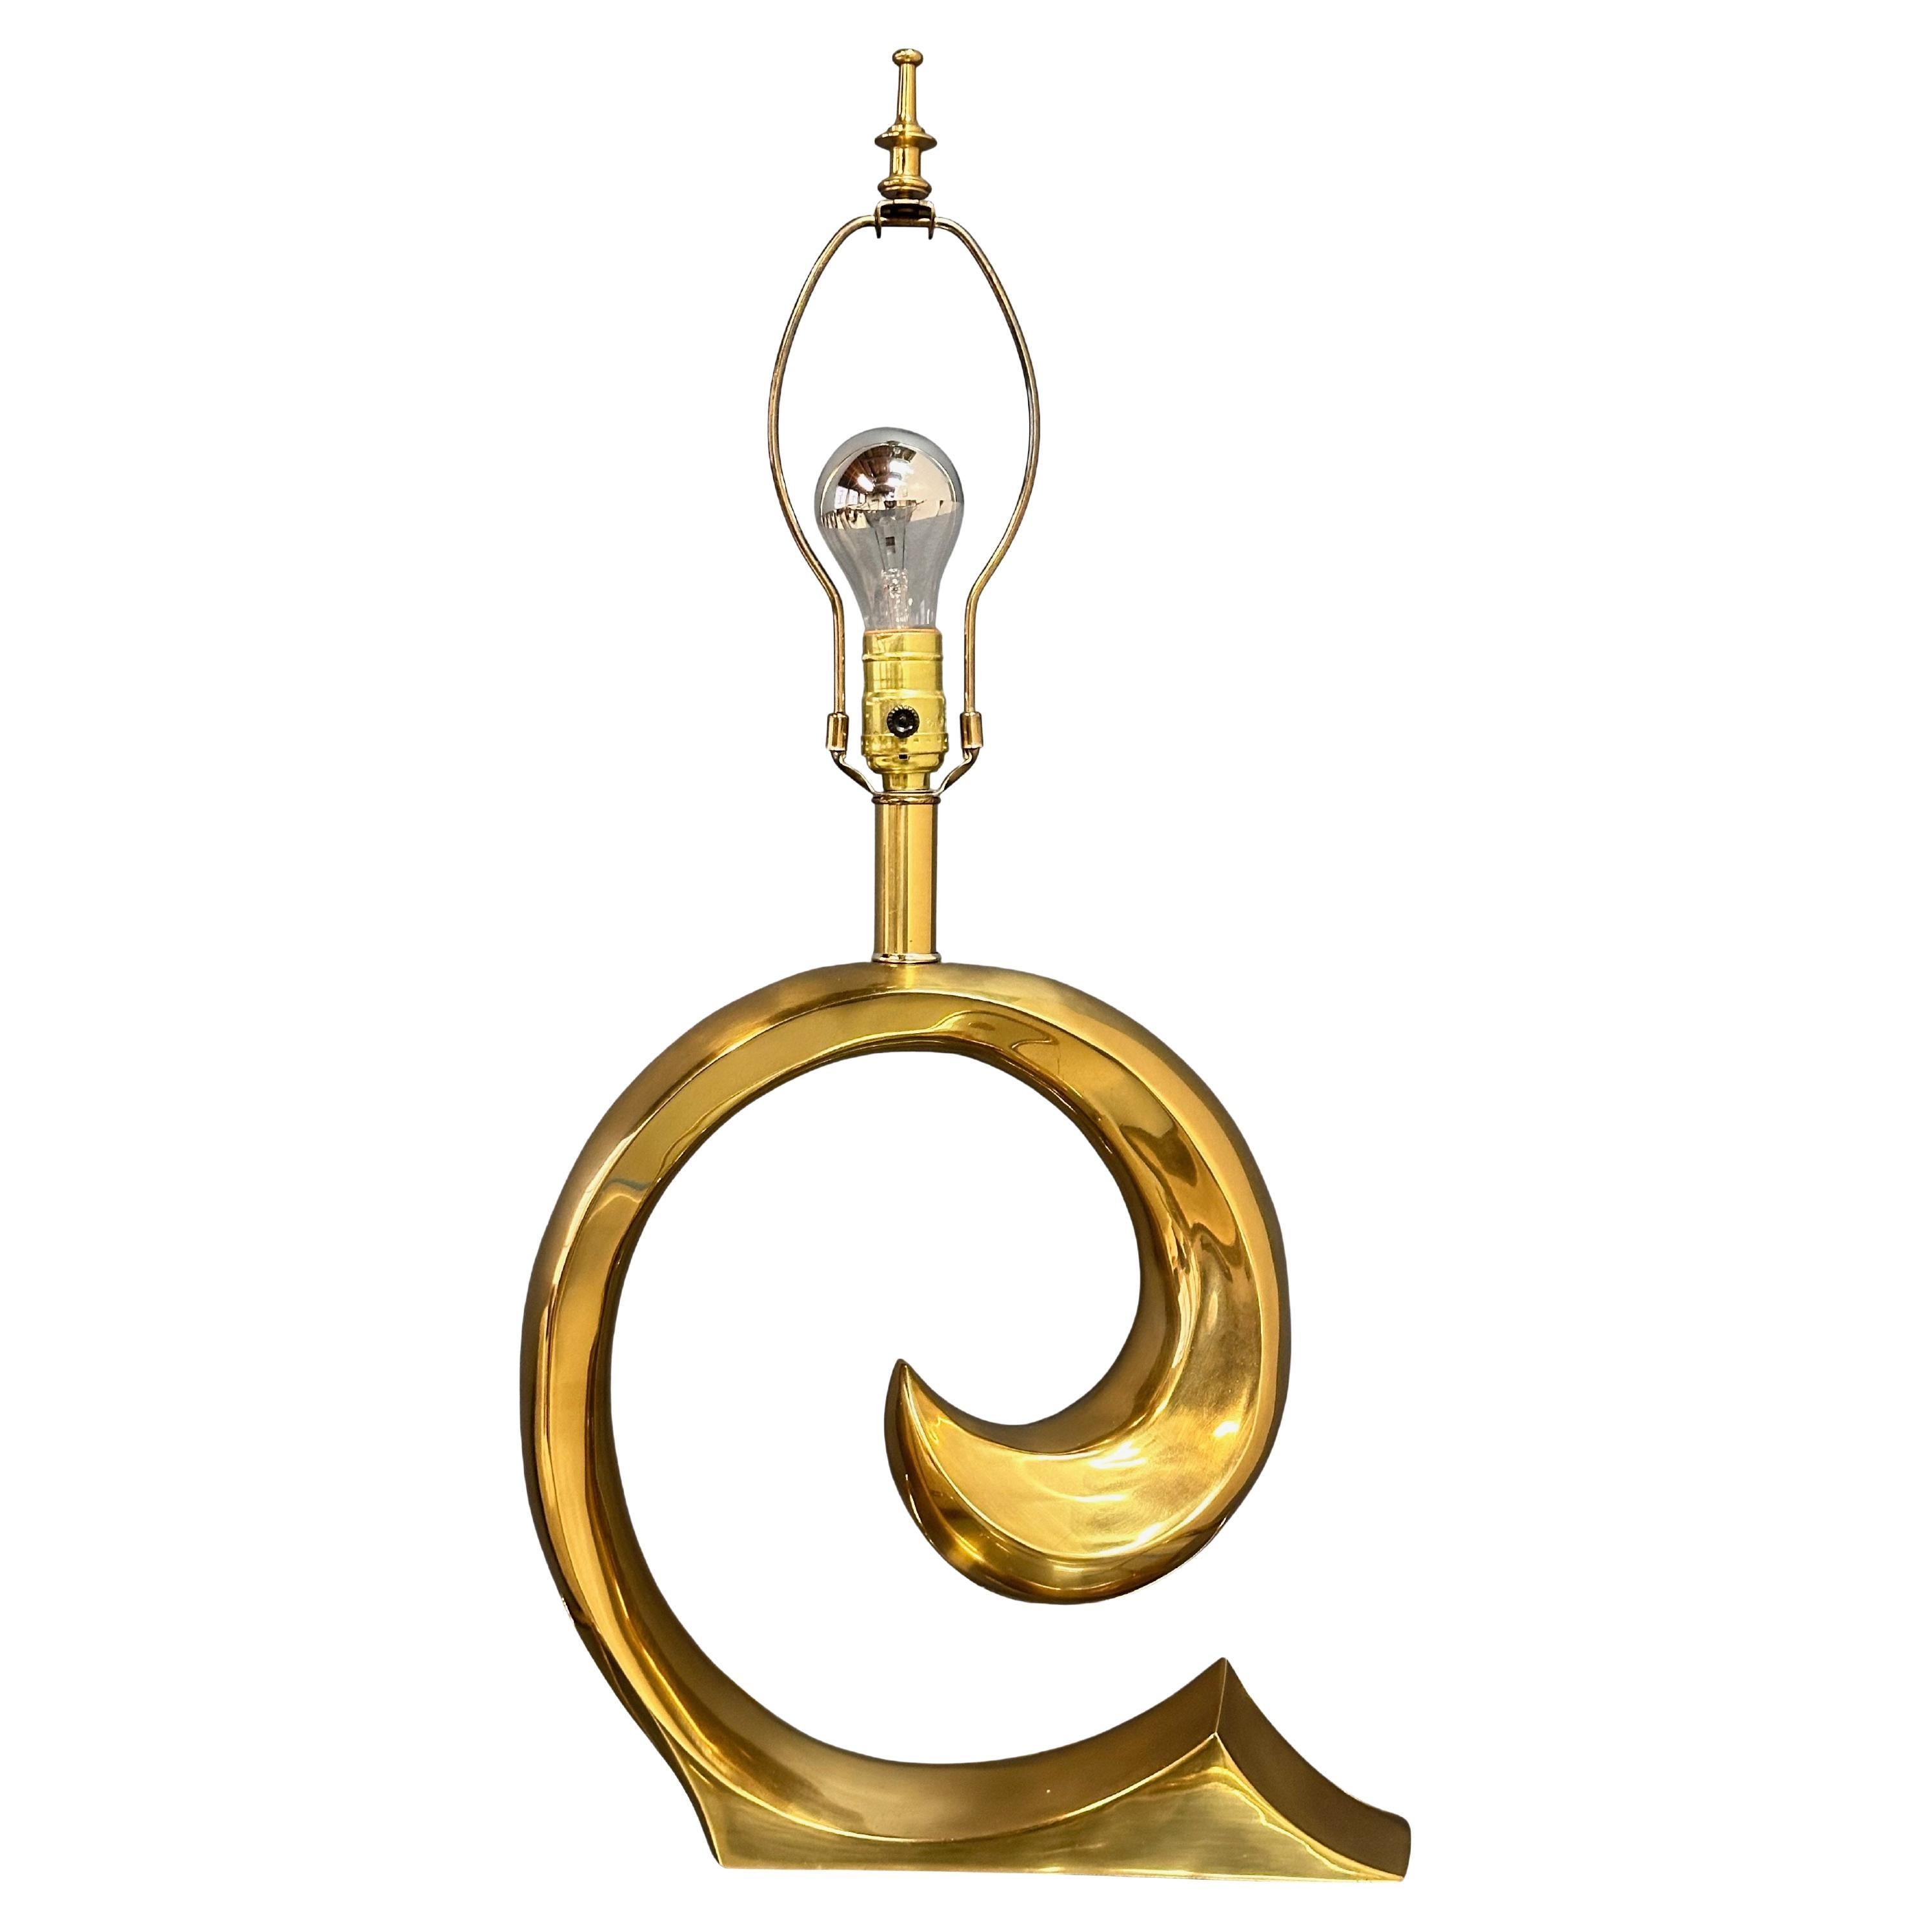 Lampe de bureau en laiton avec logo Pierre Cardin par Erwin Lambeth